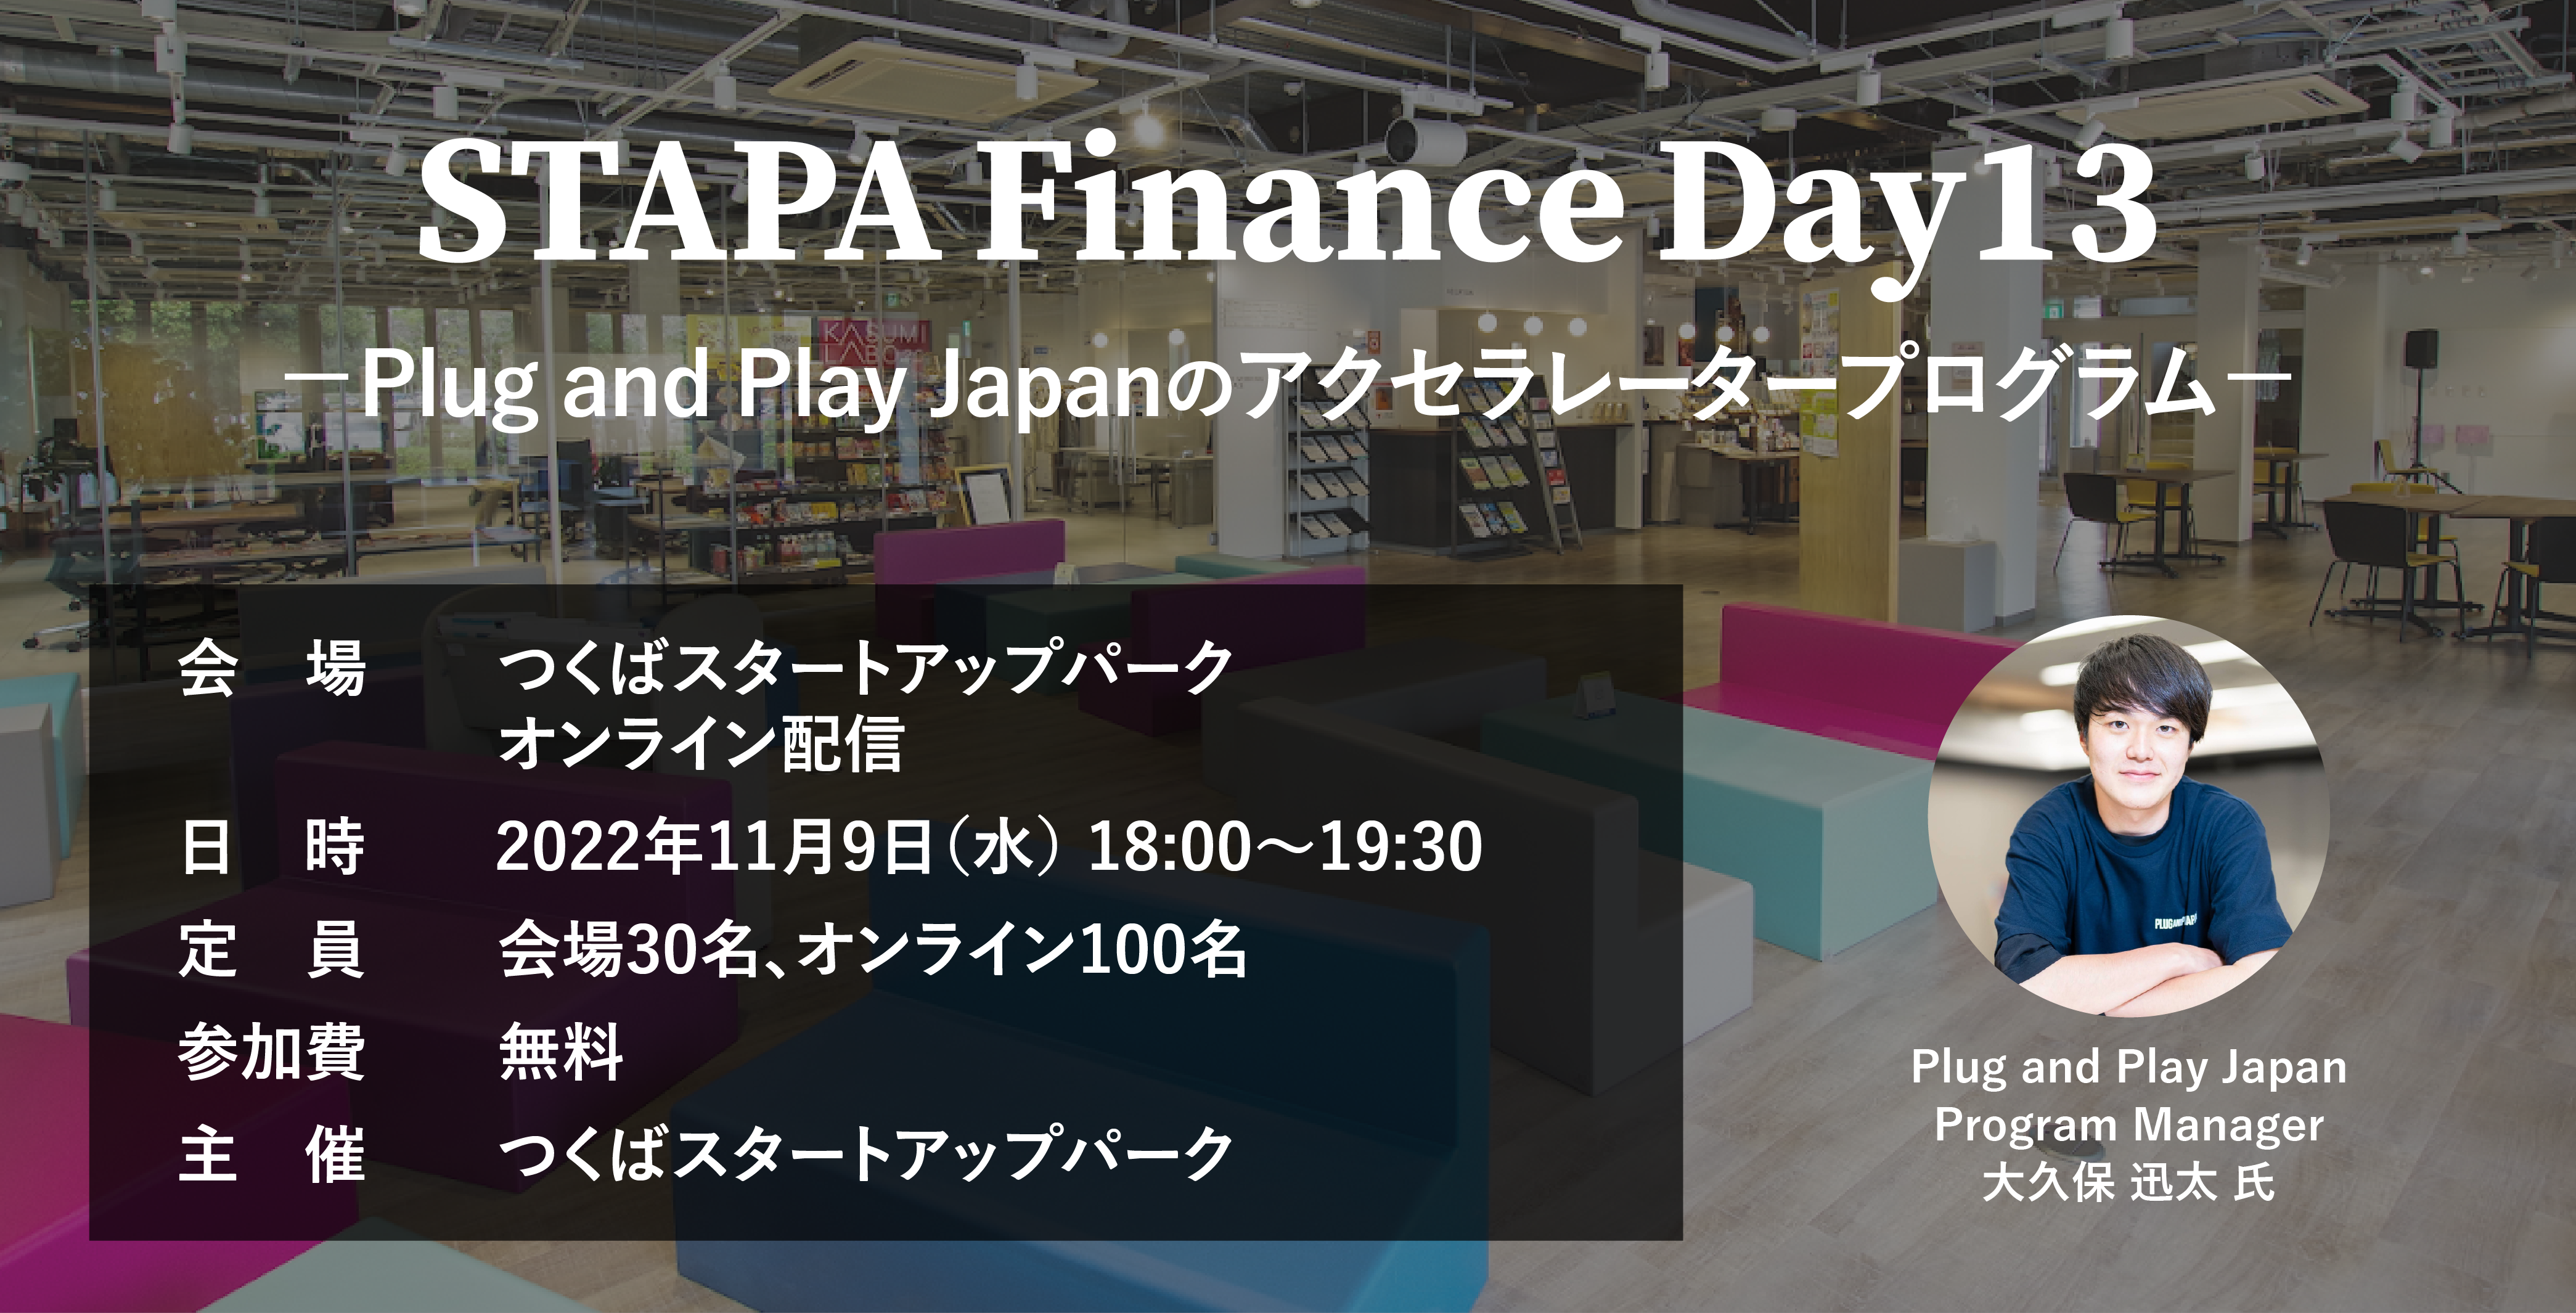 STAPA Finance Day13 －Plug and Play Japanのアクセラレータープログラム－